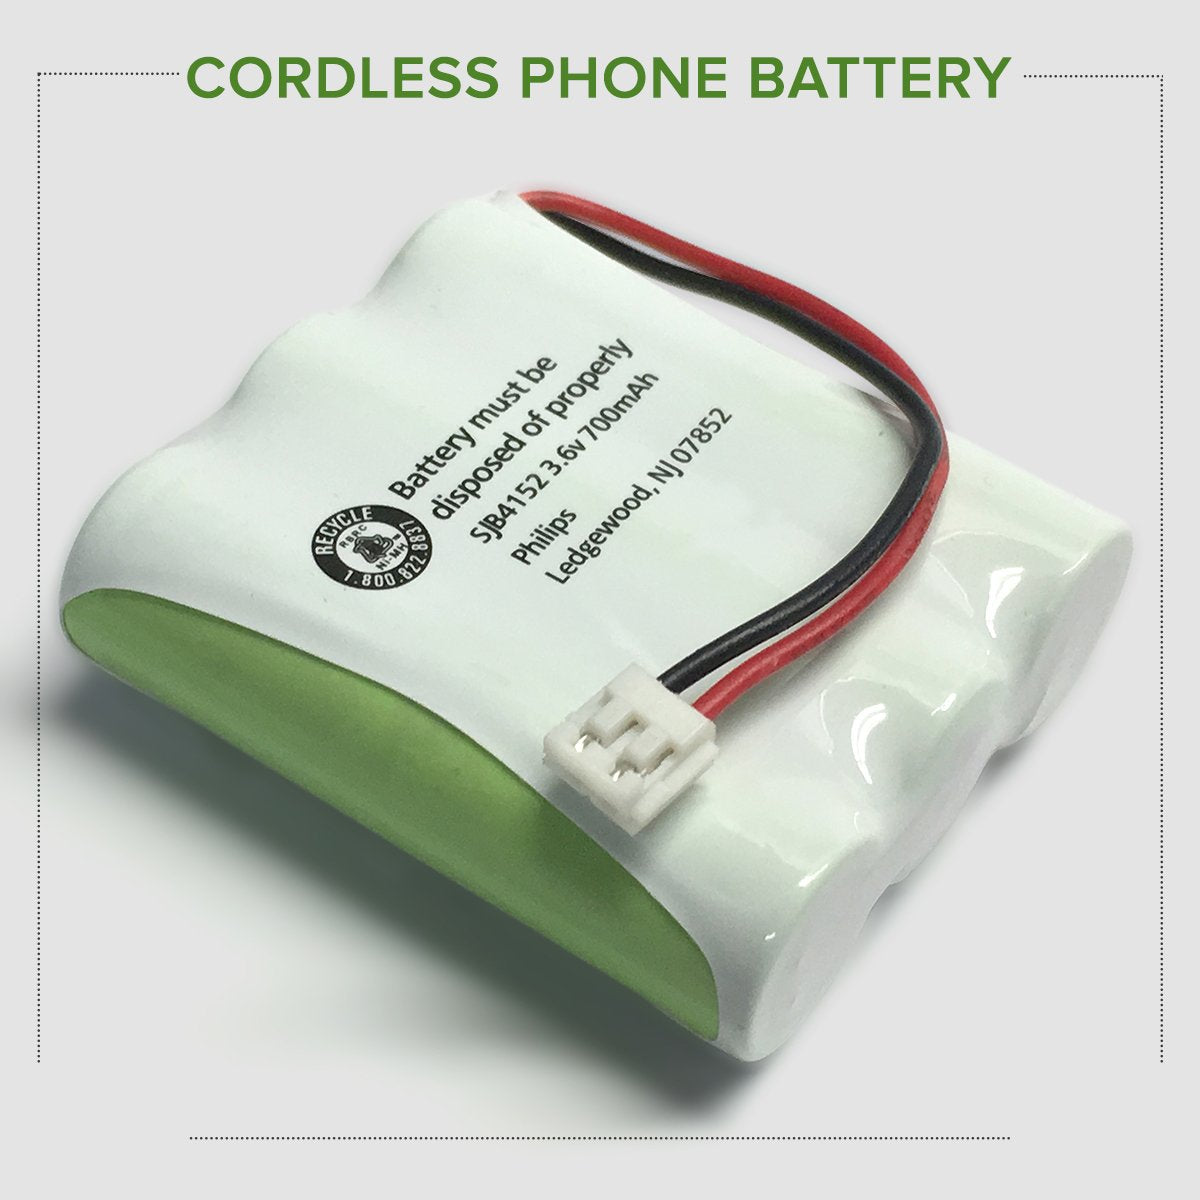 AT&T  9465 Cordless Phone Battery